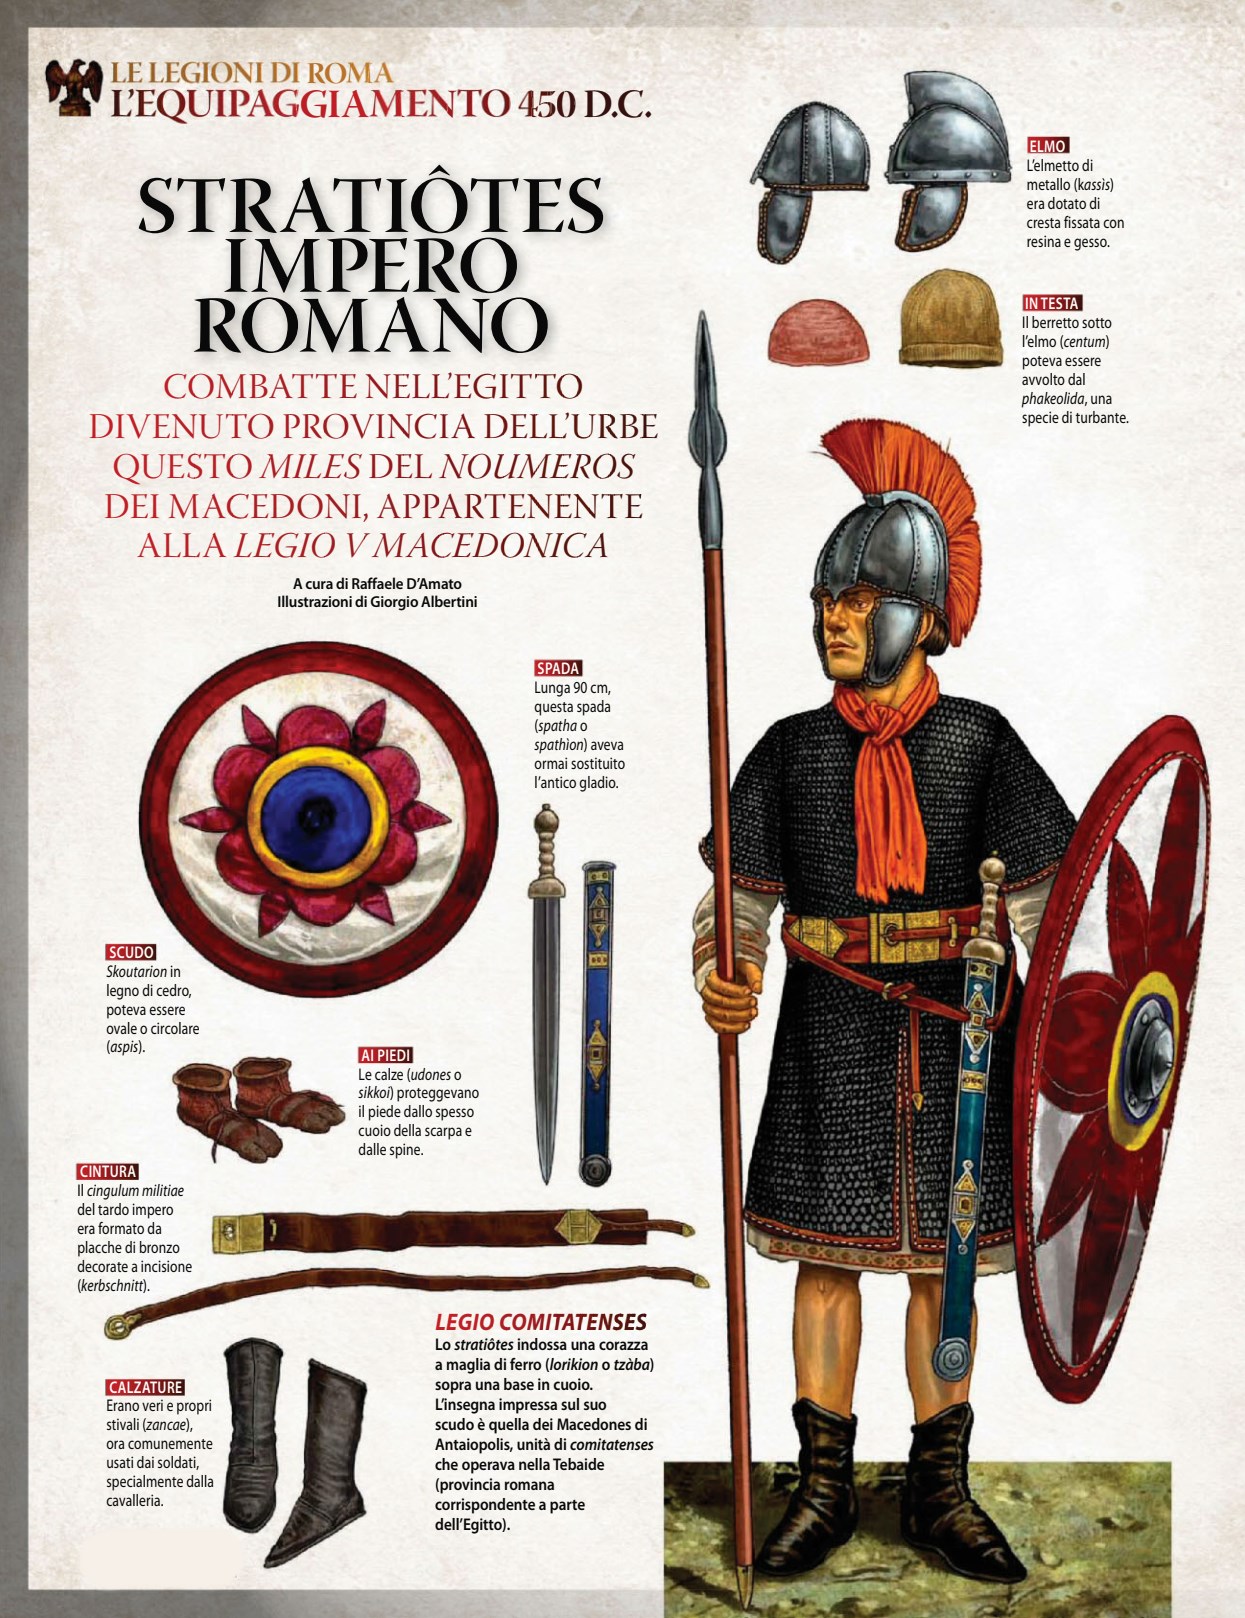 Roman Emperor Avitus 9 July 455–17 October 456